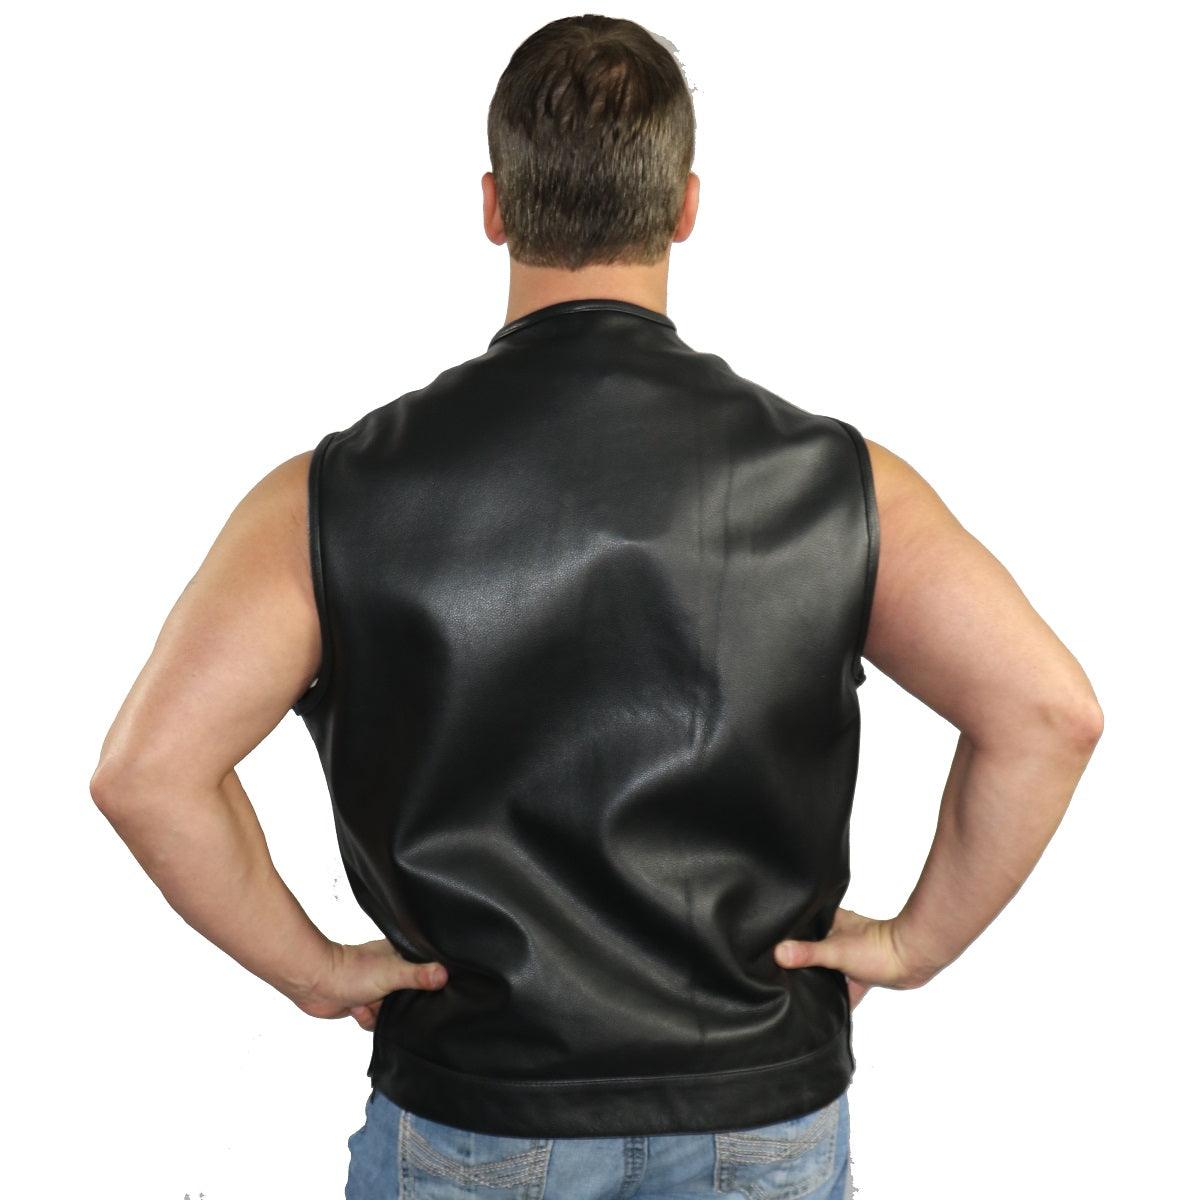 Daniel Smart Upgraded Club Style Vest with Gun Pockets - American Legend Rider